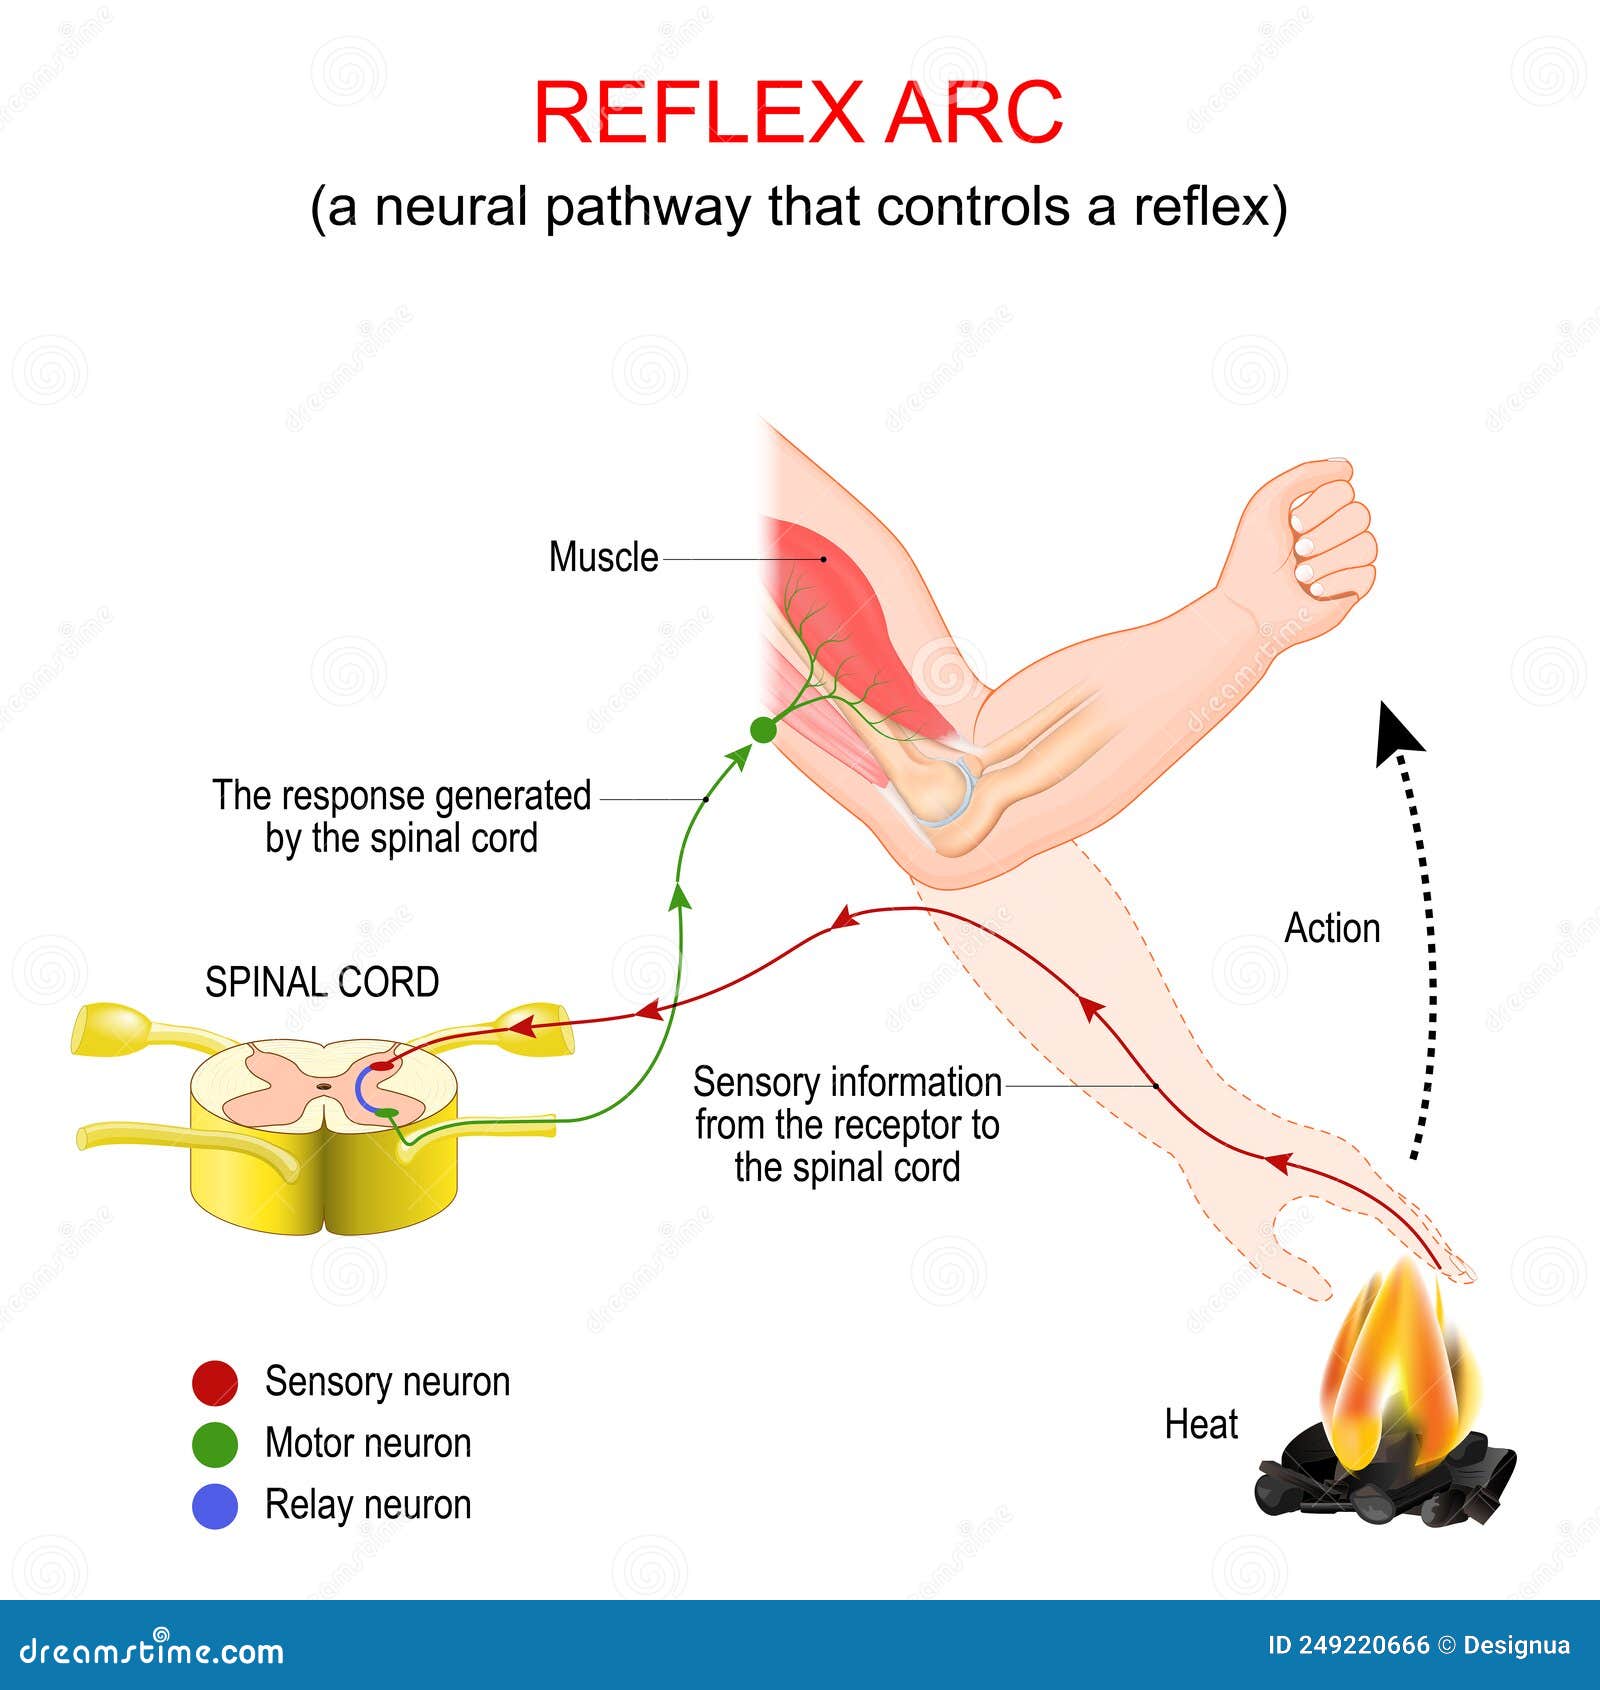 reflex arc. a neural pathway that controls a reflex